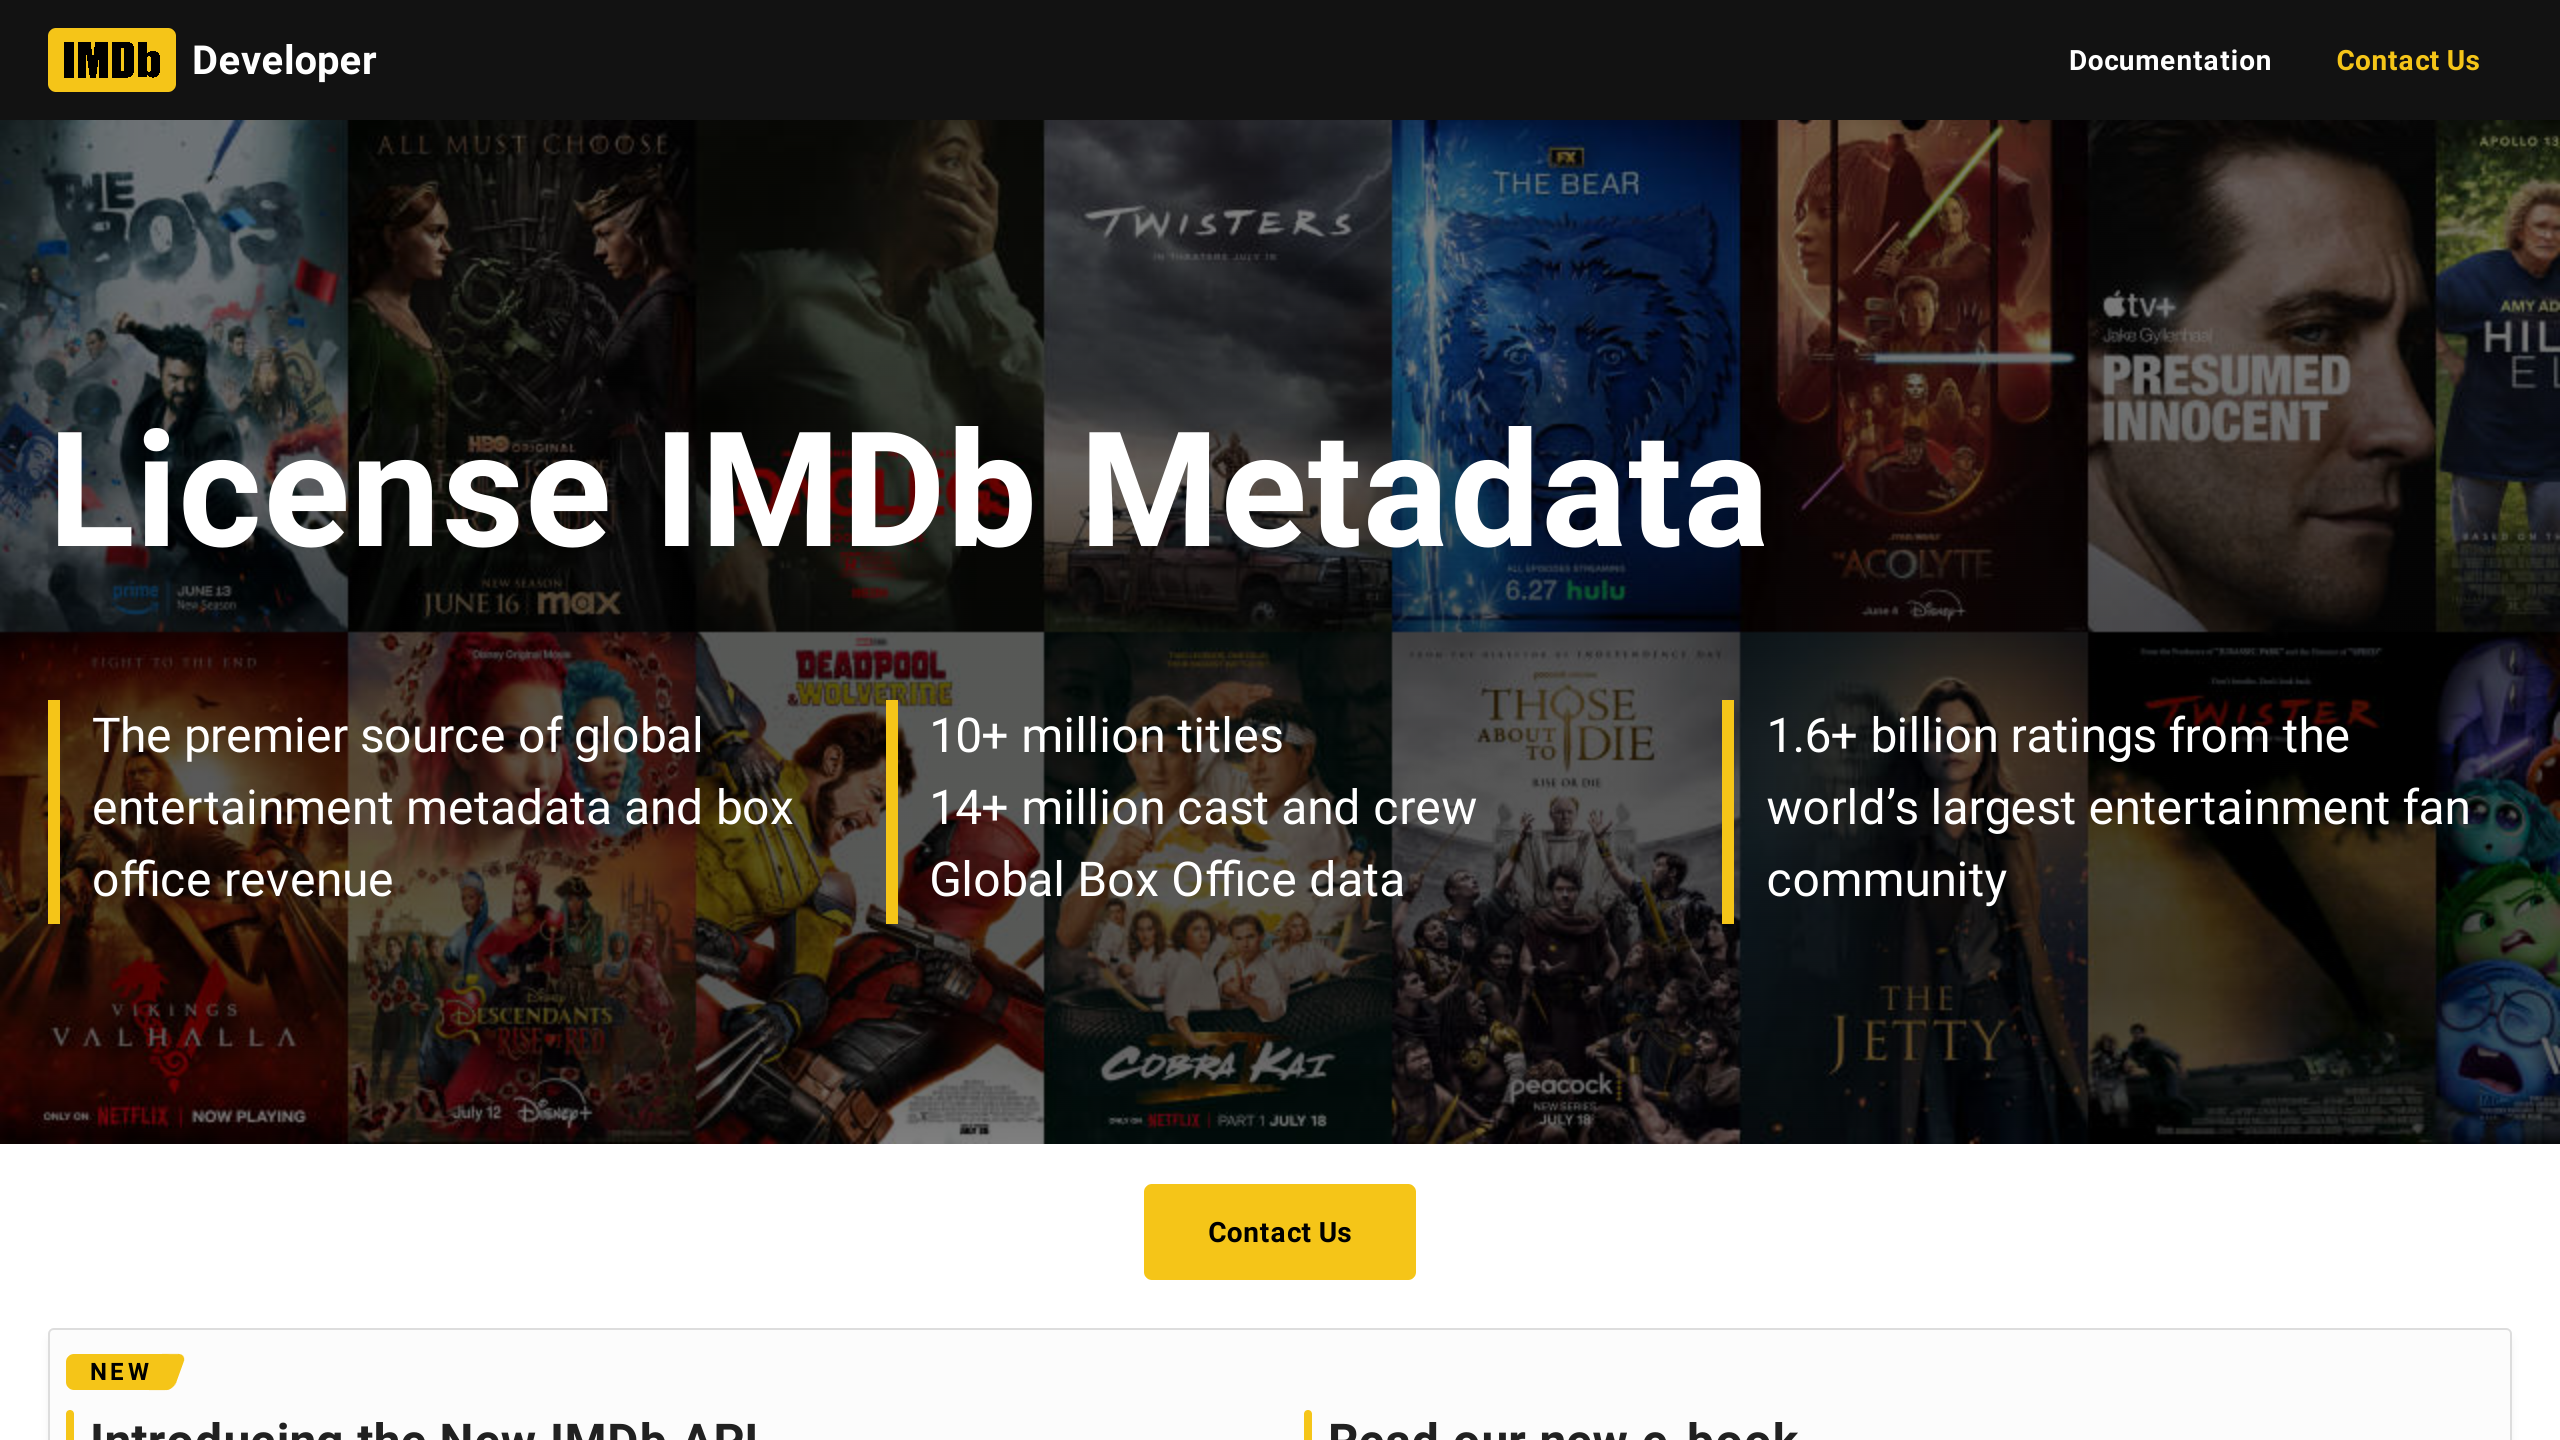 IMDb's website screenshot